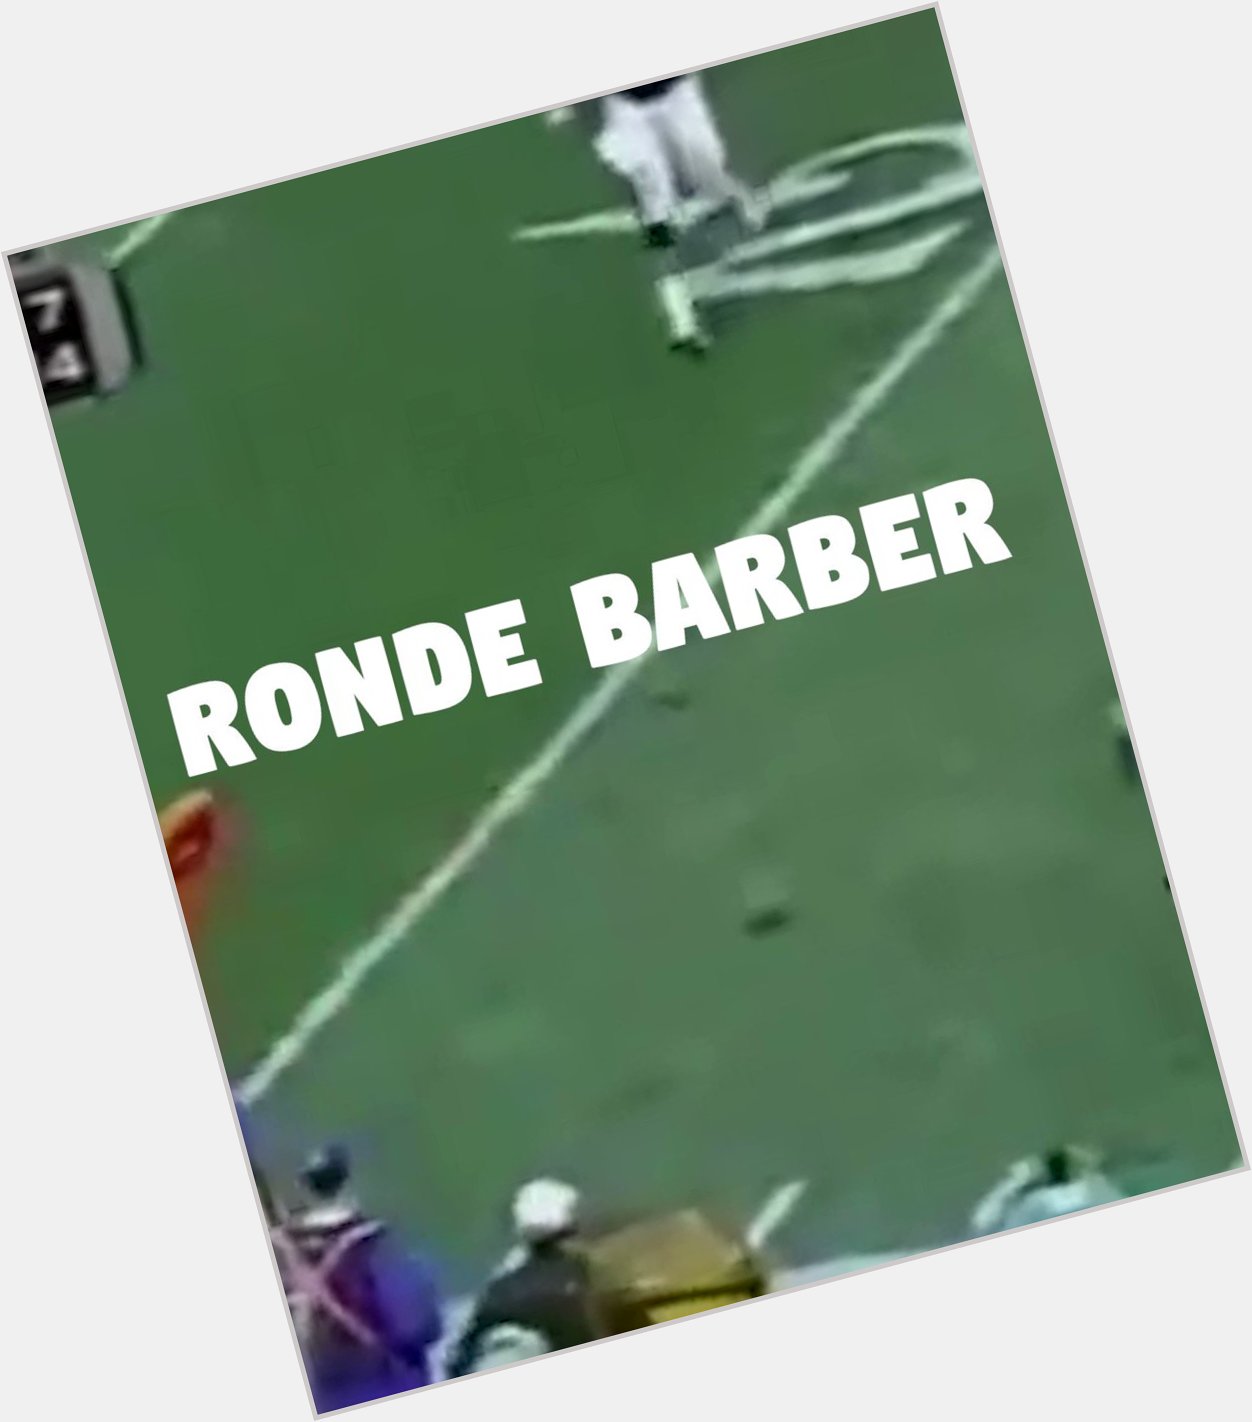 Those early 2000s Bucs defenses were LOCKDOWN.    Happy Birthday Ronde Barber!   